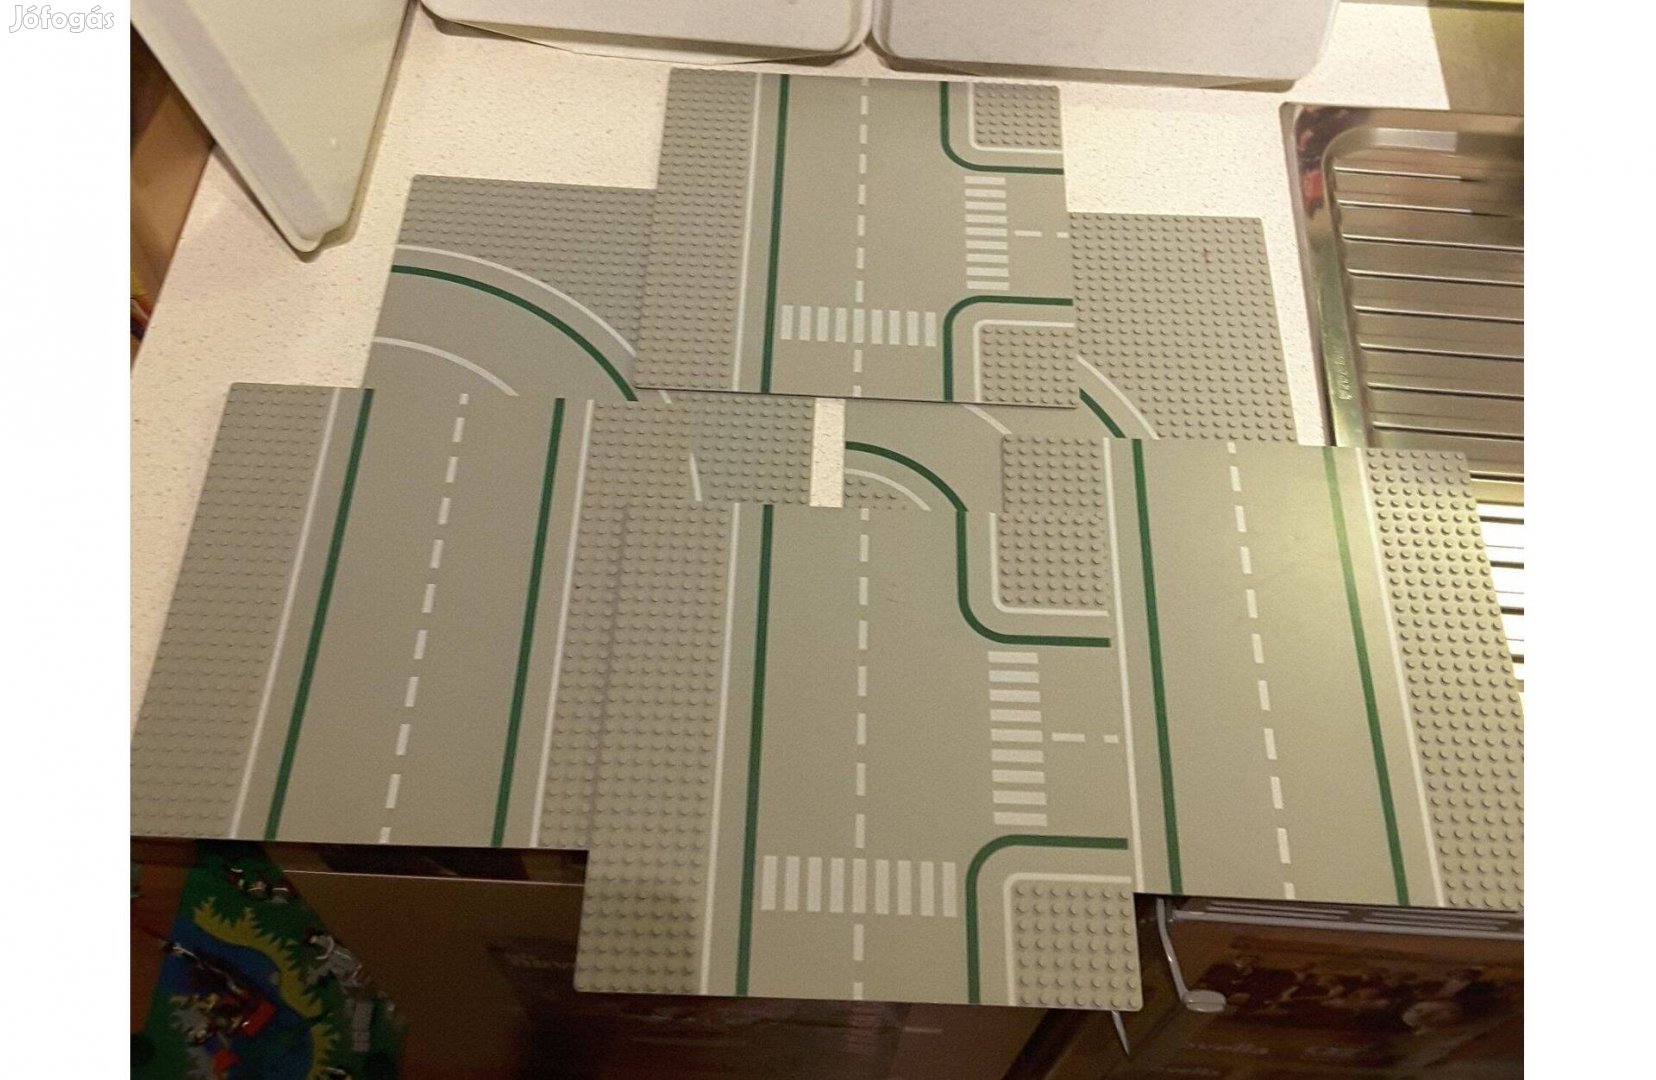 Lego 6310 Út / utca alaplapok / Road plates 6 DB + dobozdarab